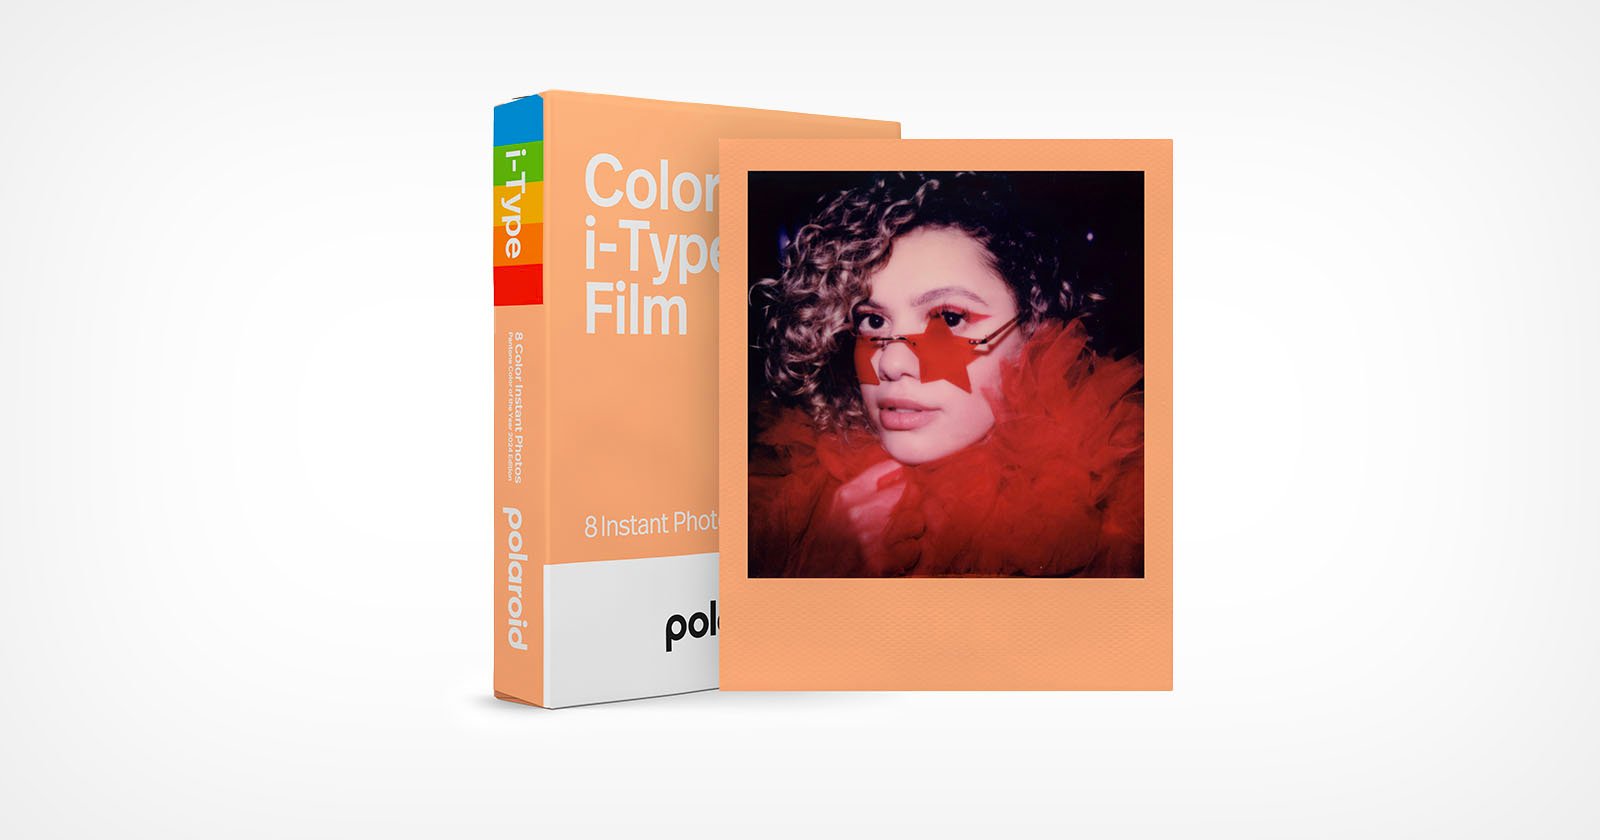 Polaroids New Pantone-Inspired Instant Film Is Just Peachy